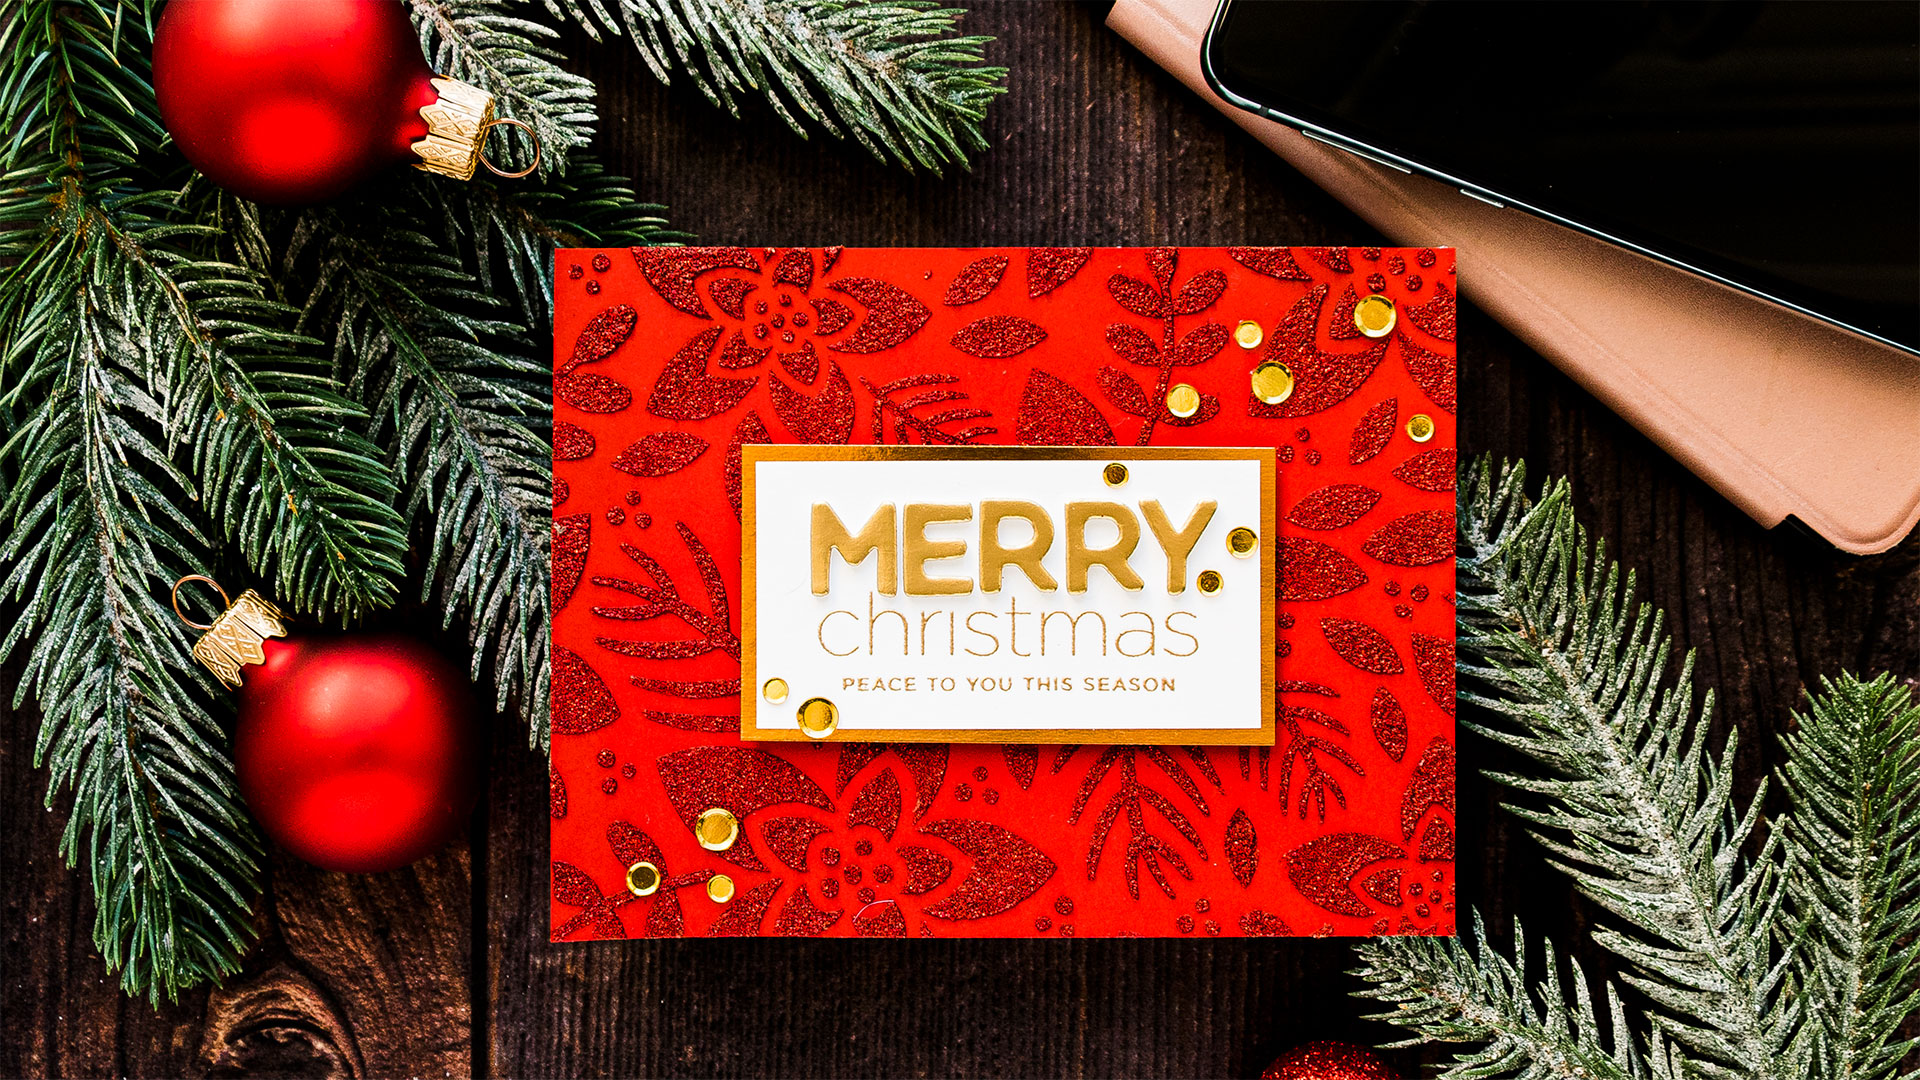 Simon Says Stamp | Merry Christmas Greeting Card – Tone on Tone Glitter ...